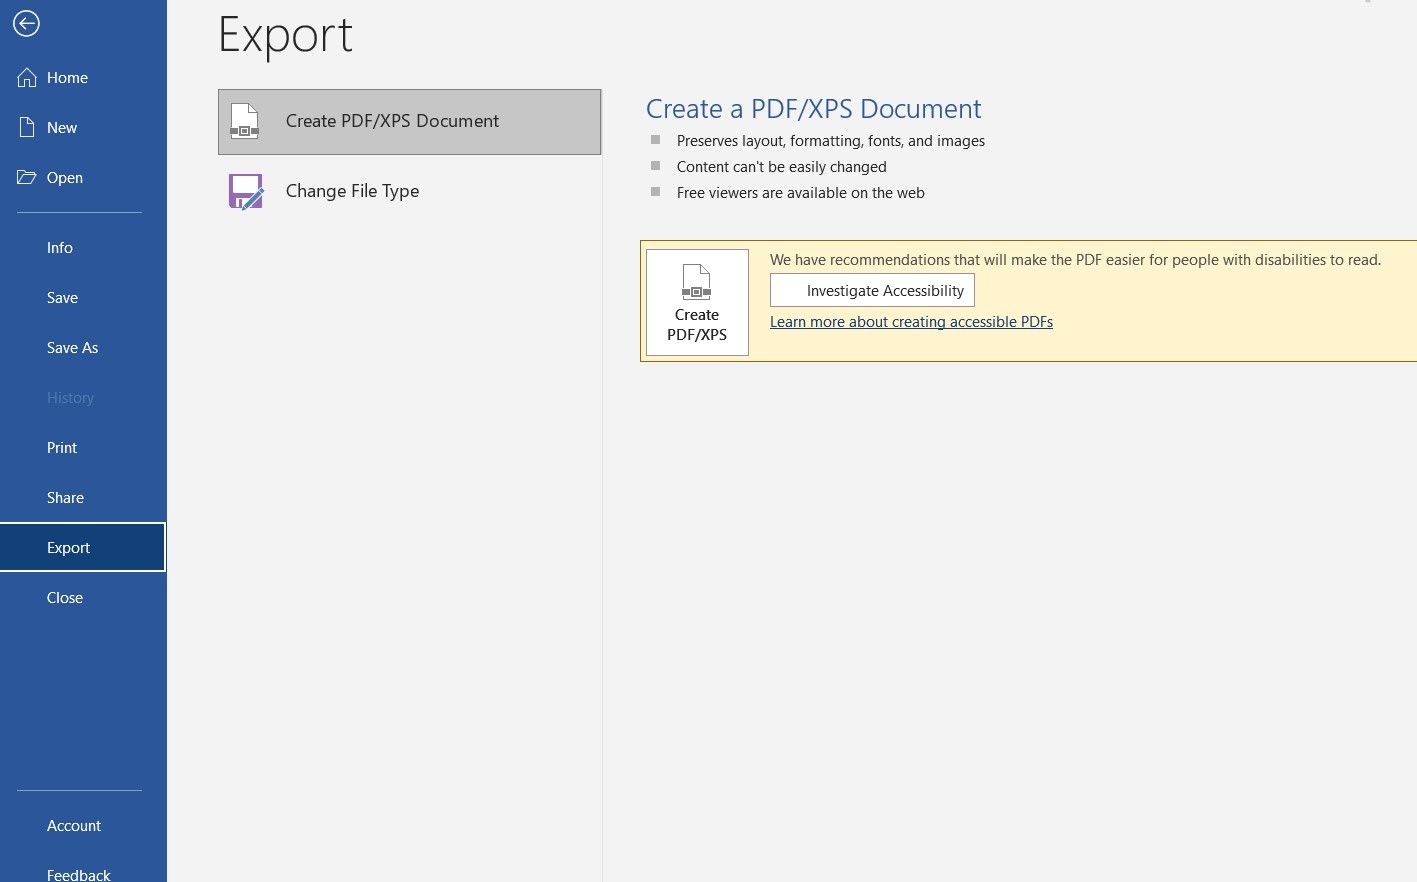 Export the ebook in PDF